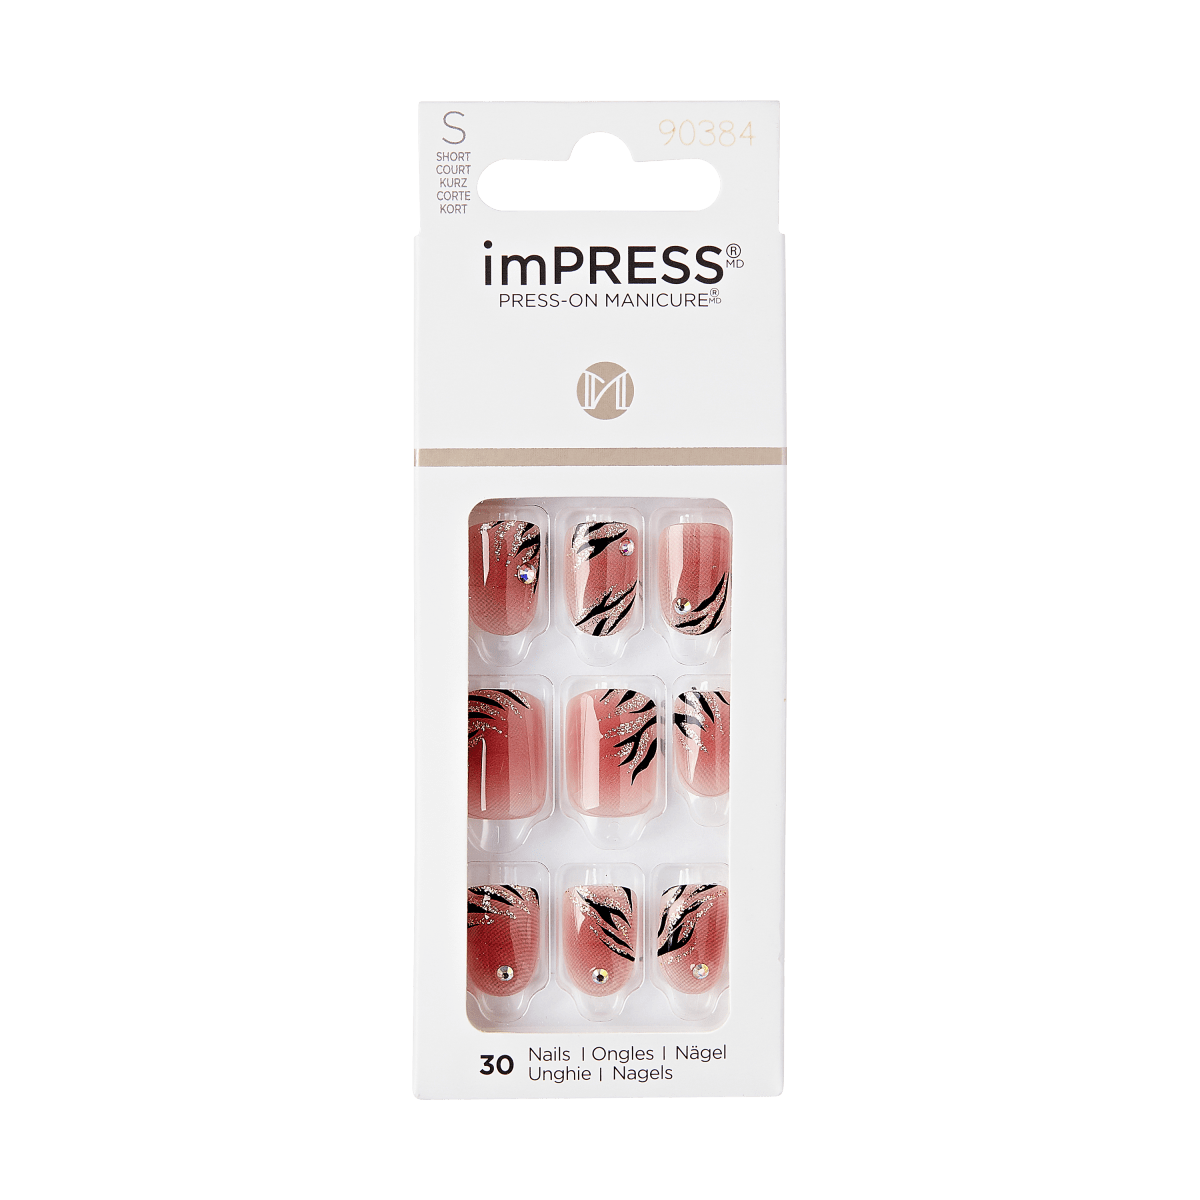 imPRESS Press-On Manicure - Stay Cozy